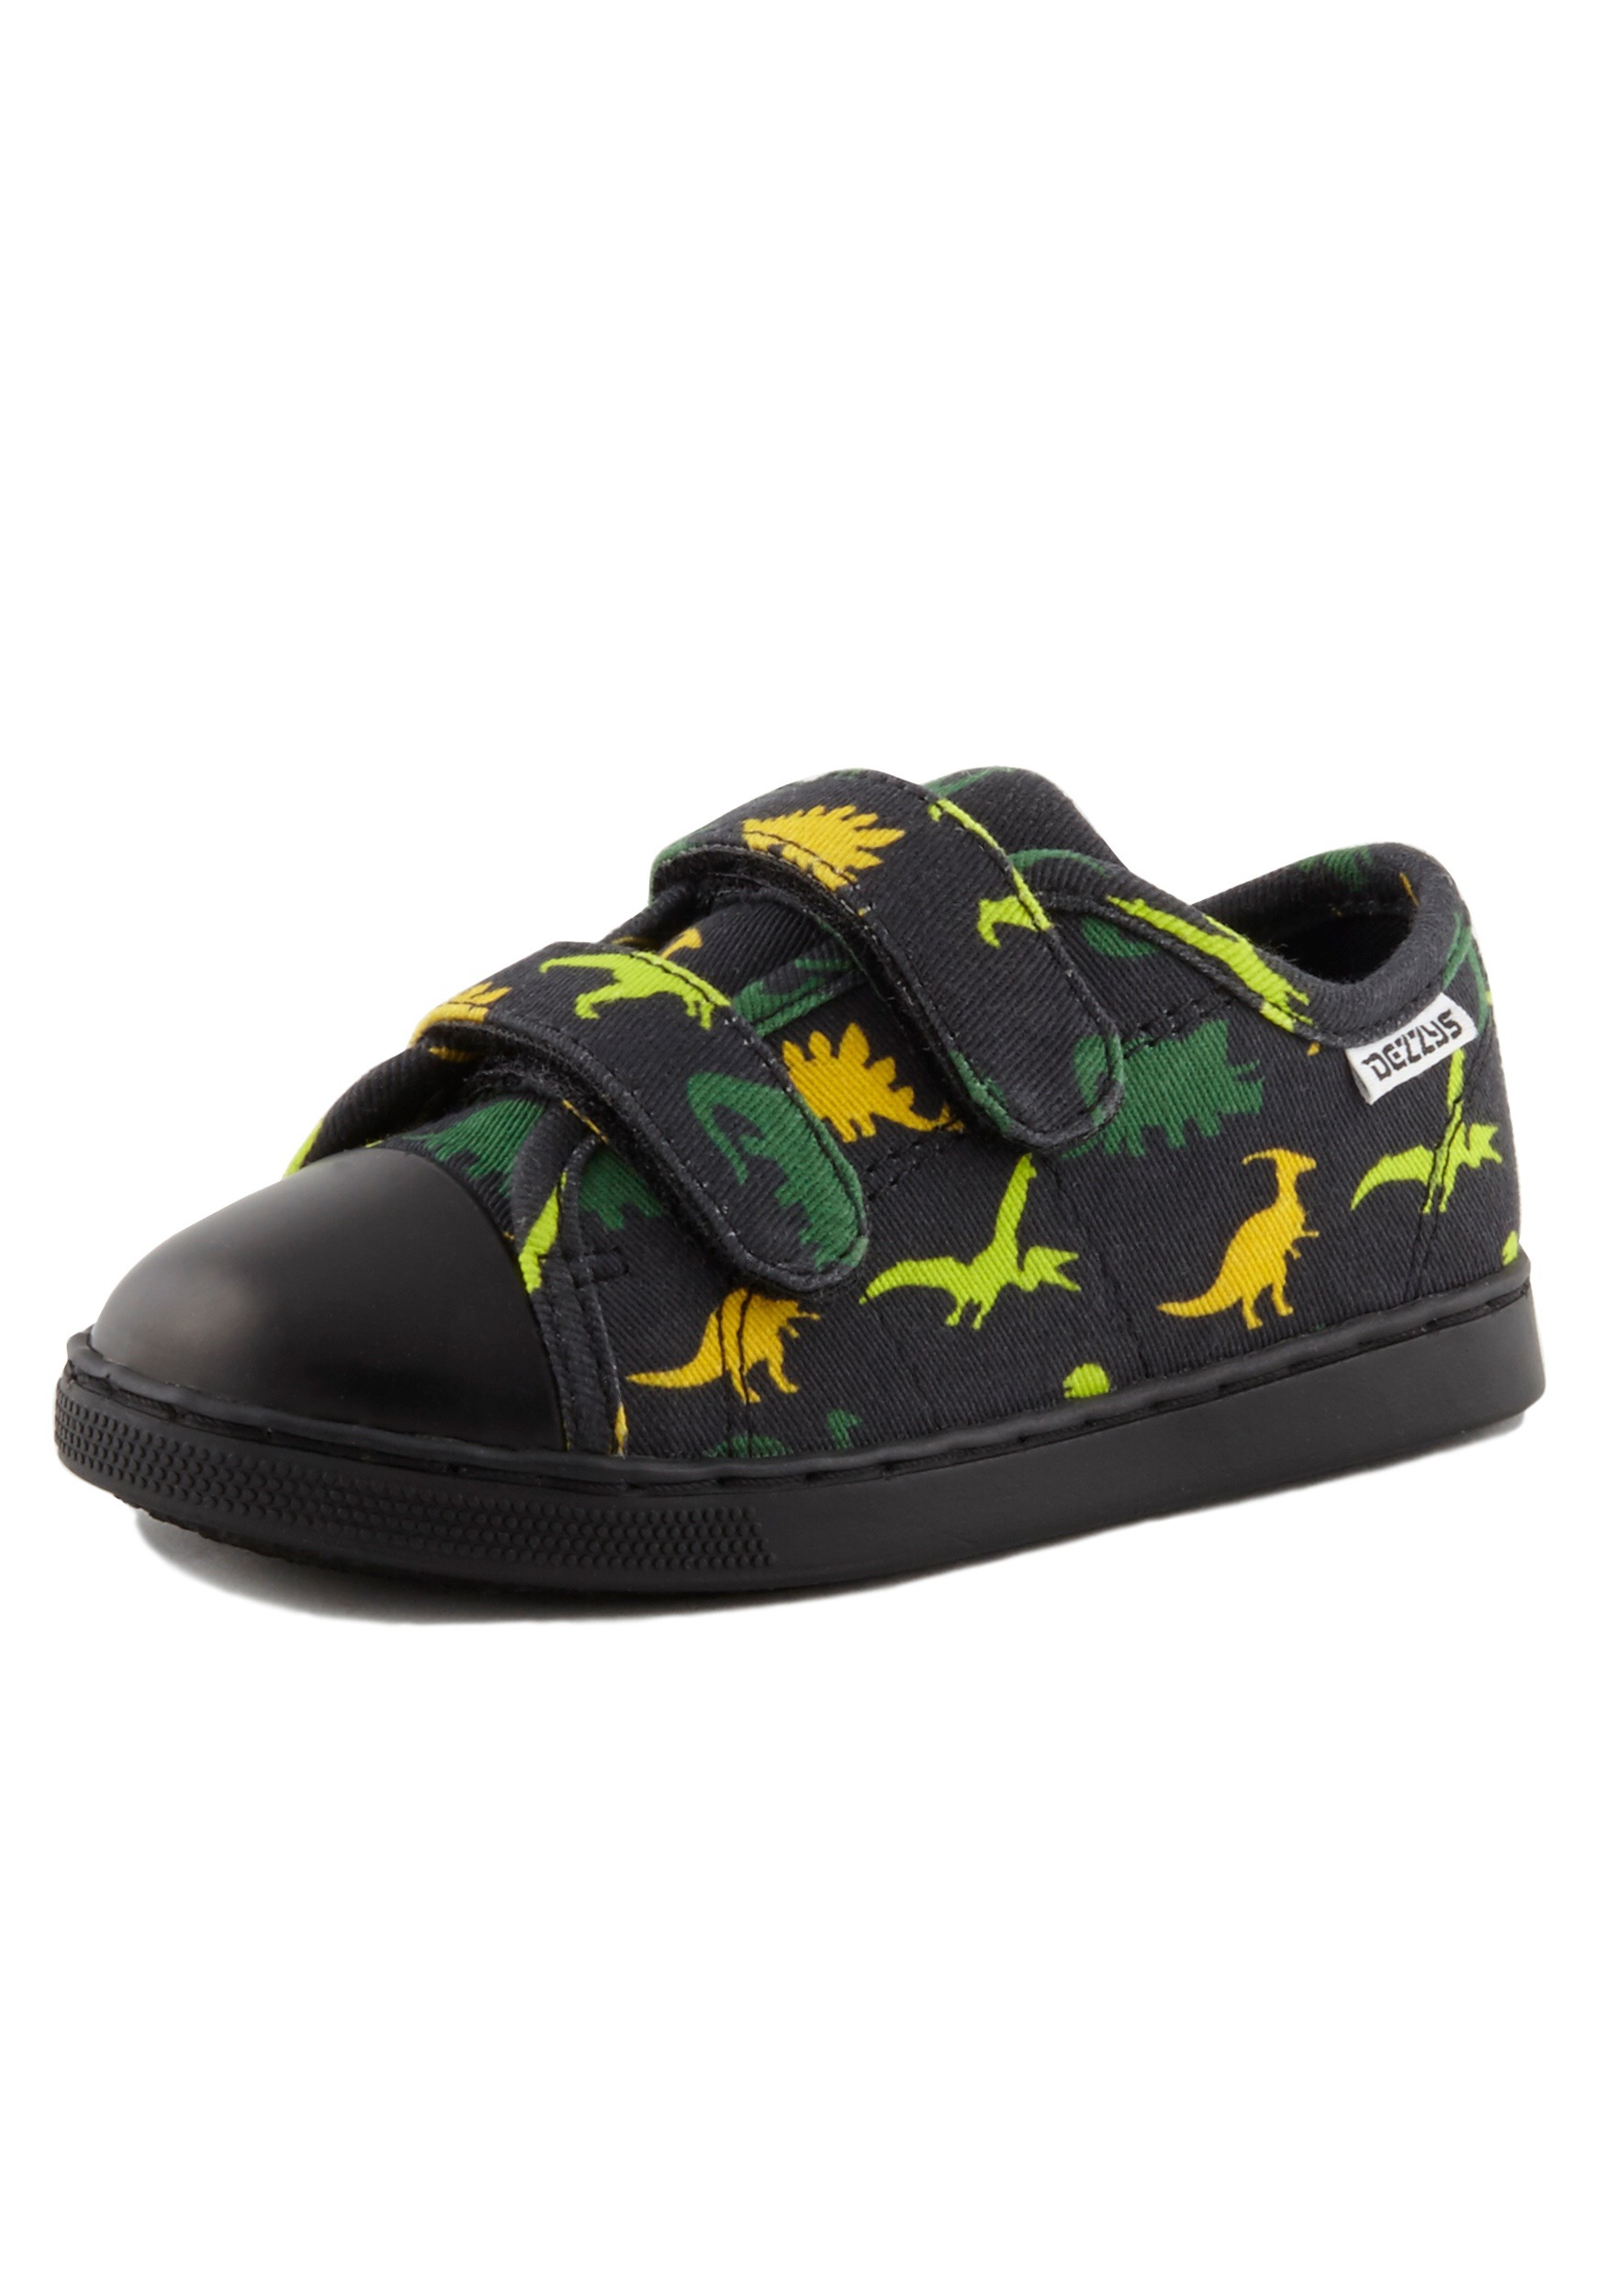 Dezzy Marley Green Dinosaur Shoes for Children